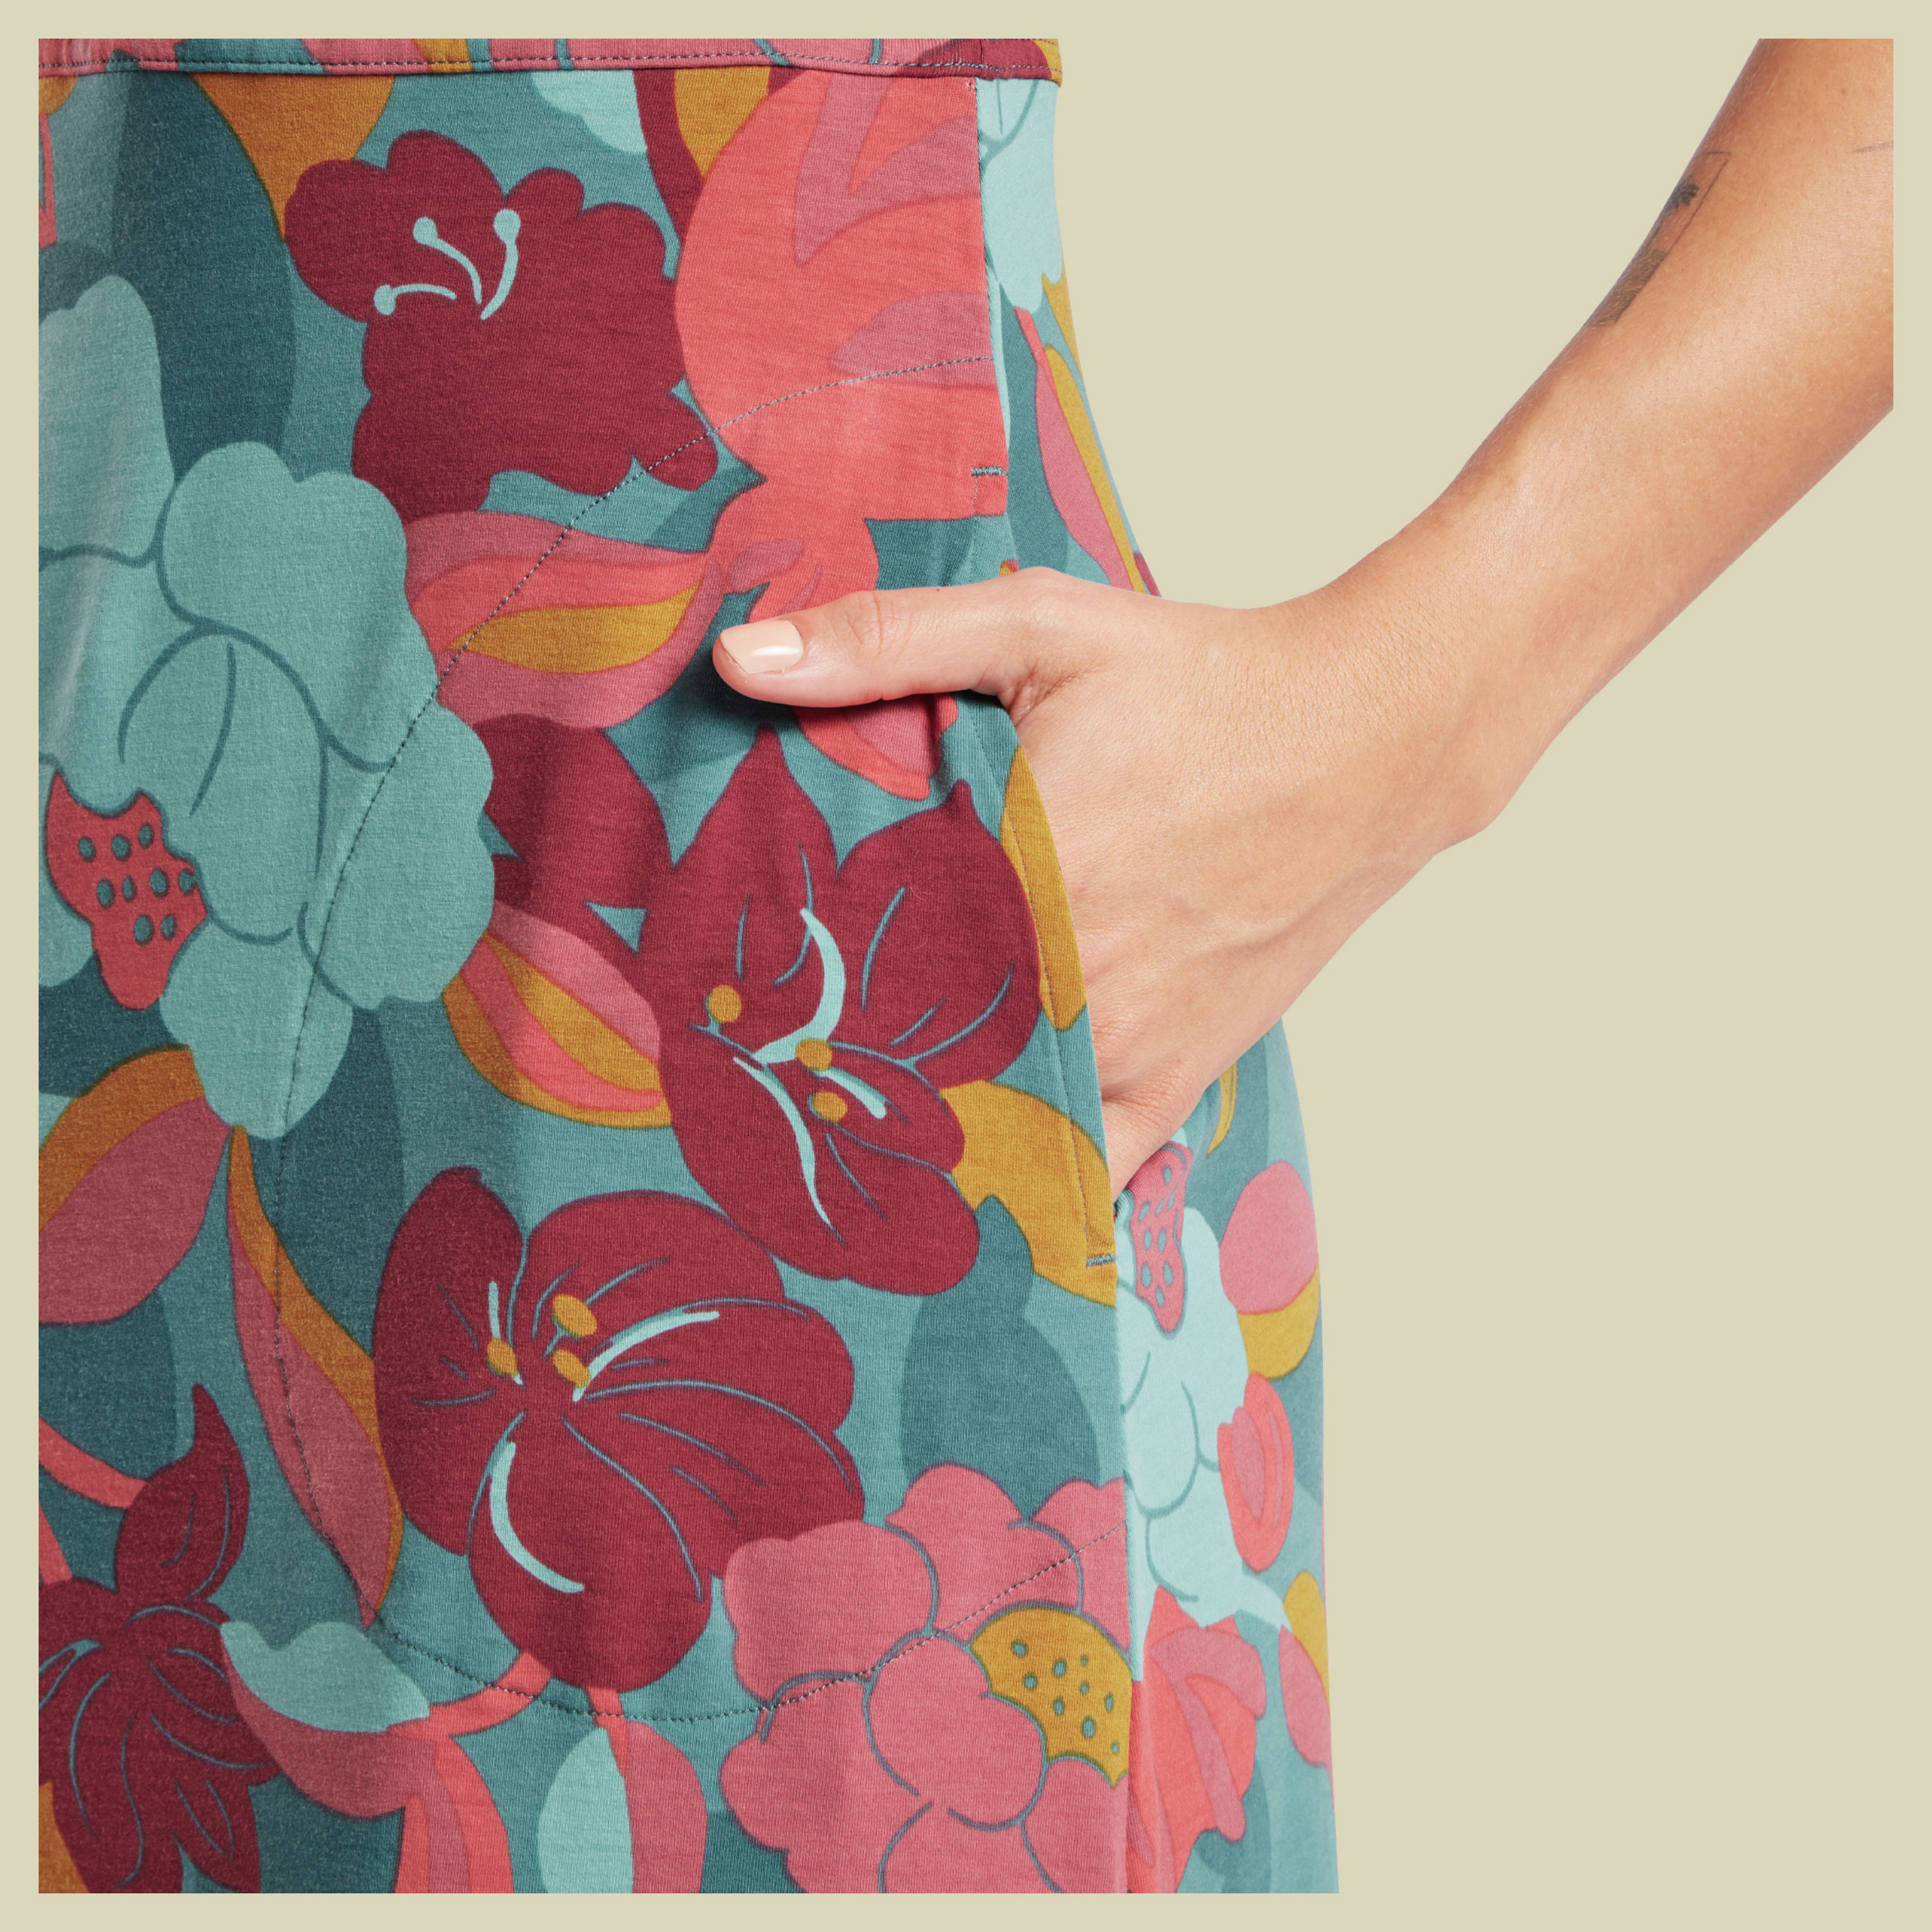 Neha Midi Dress Women mehrfarbig S - Farbe hydra oversize floral